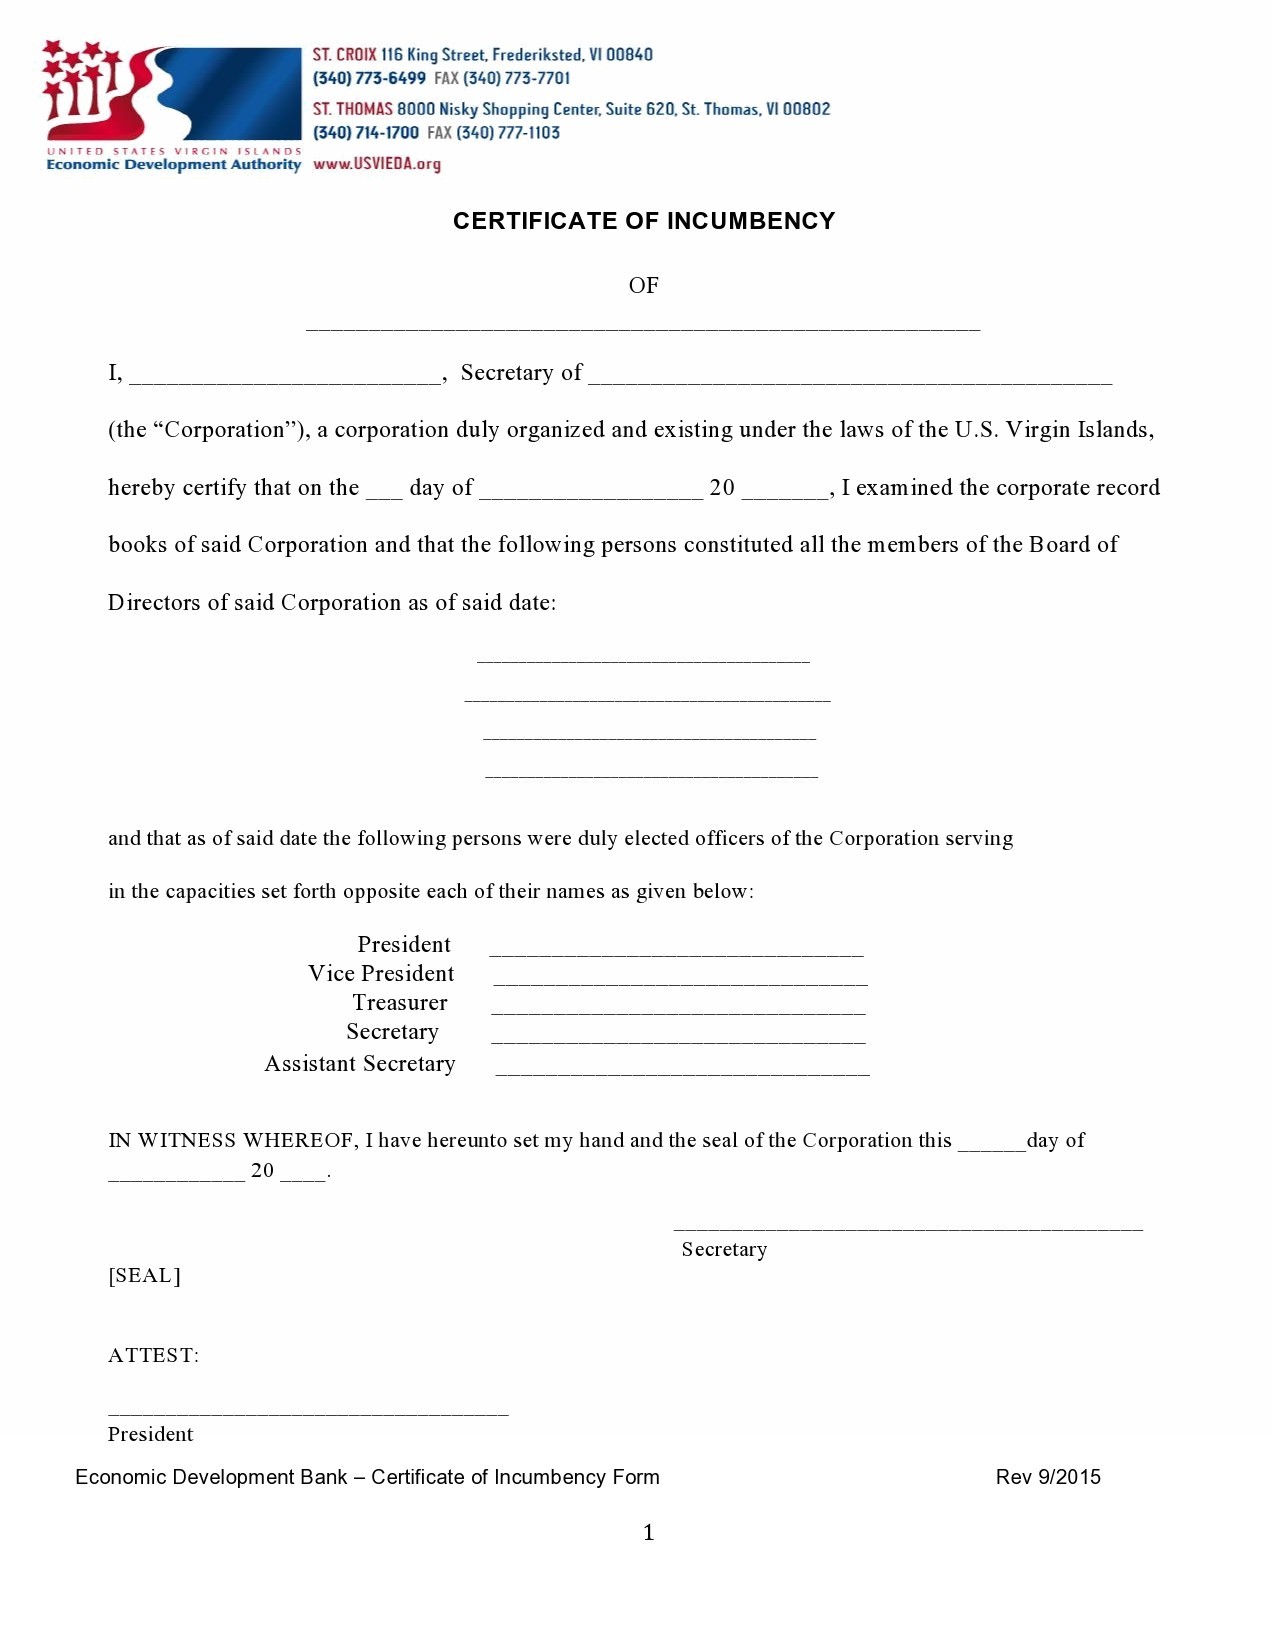 Free certificate of incumbency 12